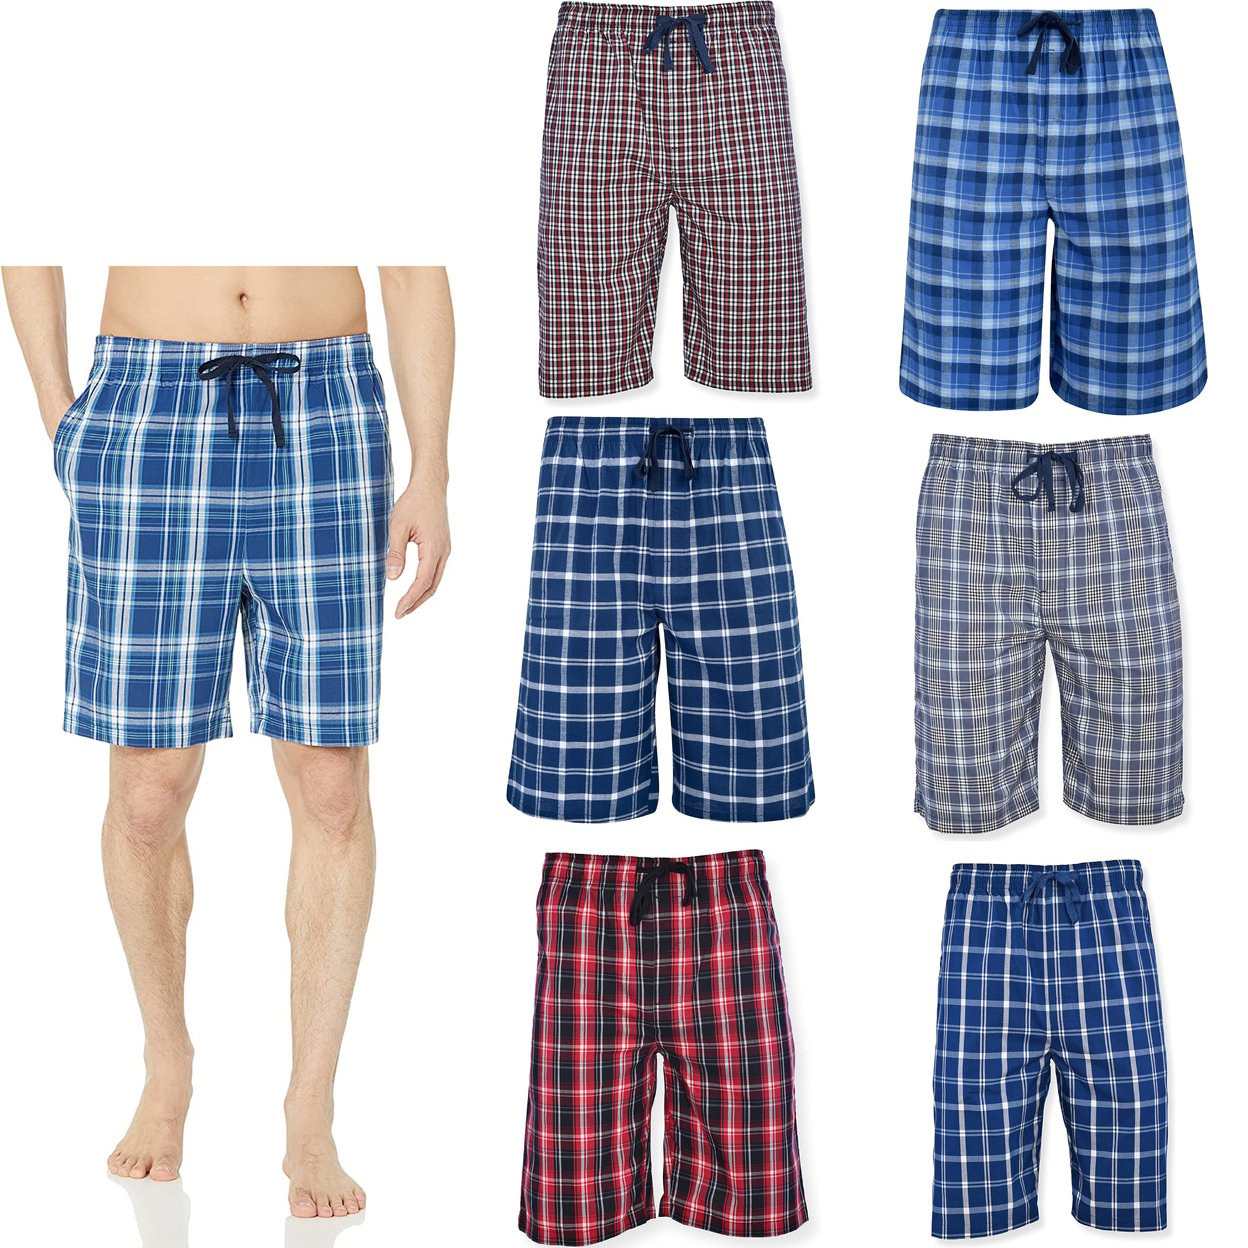 2-Pack: Men's Ultra Soft Plaid Lounge Pajama Sleep Wear Shorts - Blue & Blue, Medium